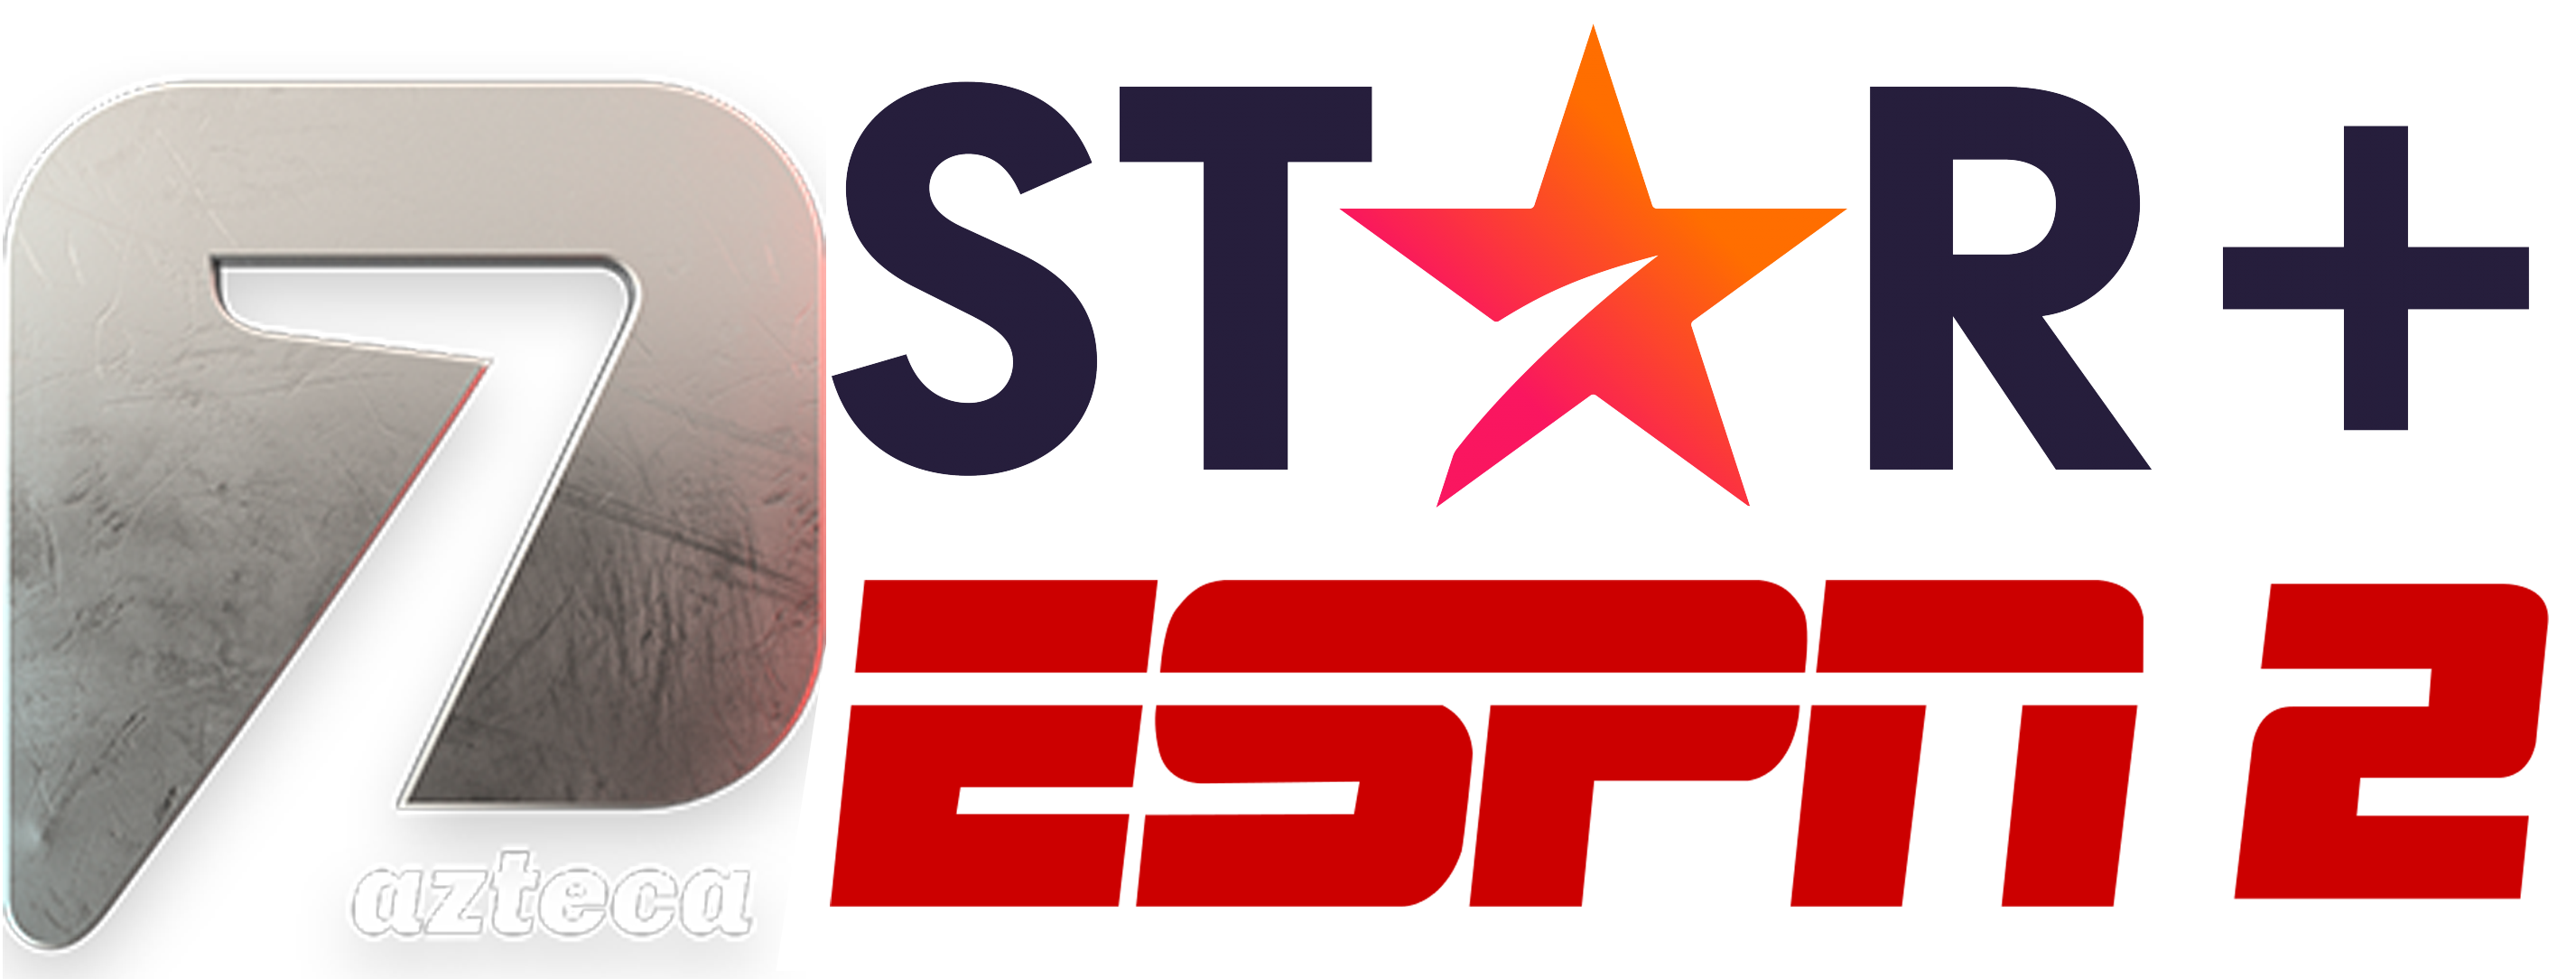 Azteca 7 | ESPN 2 | STAR+